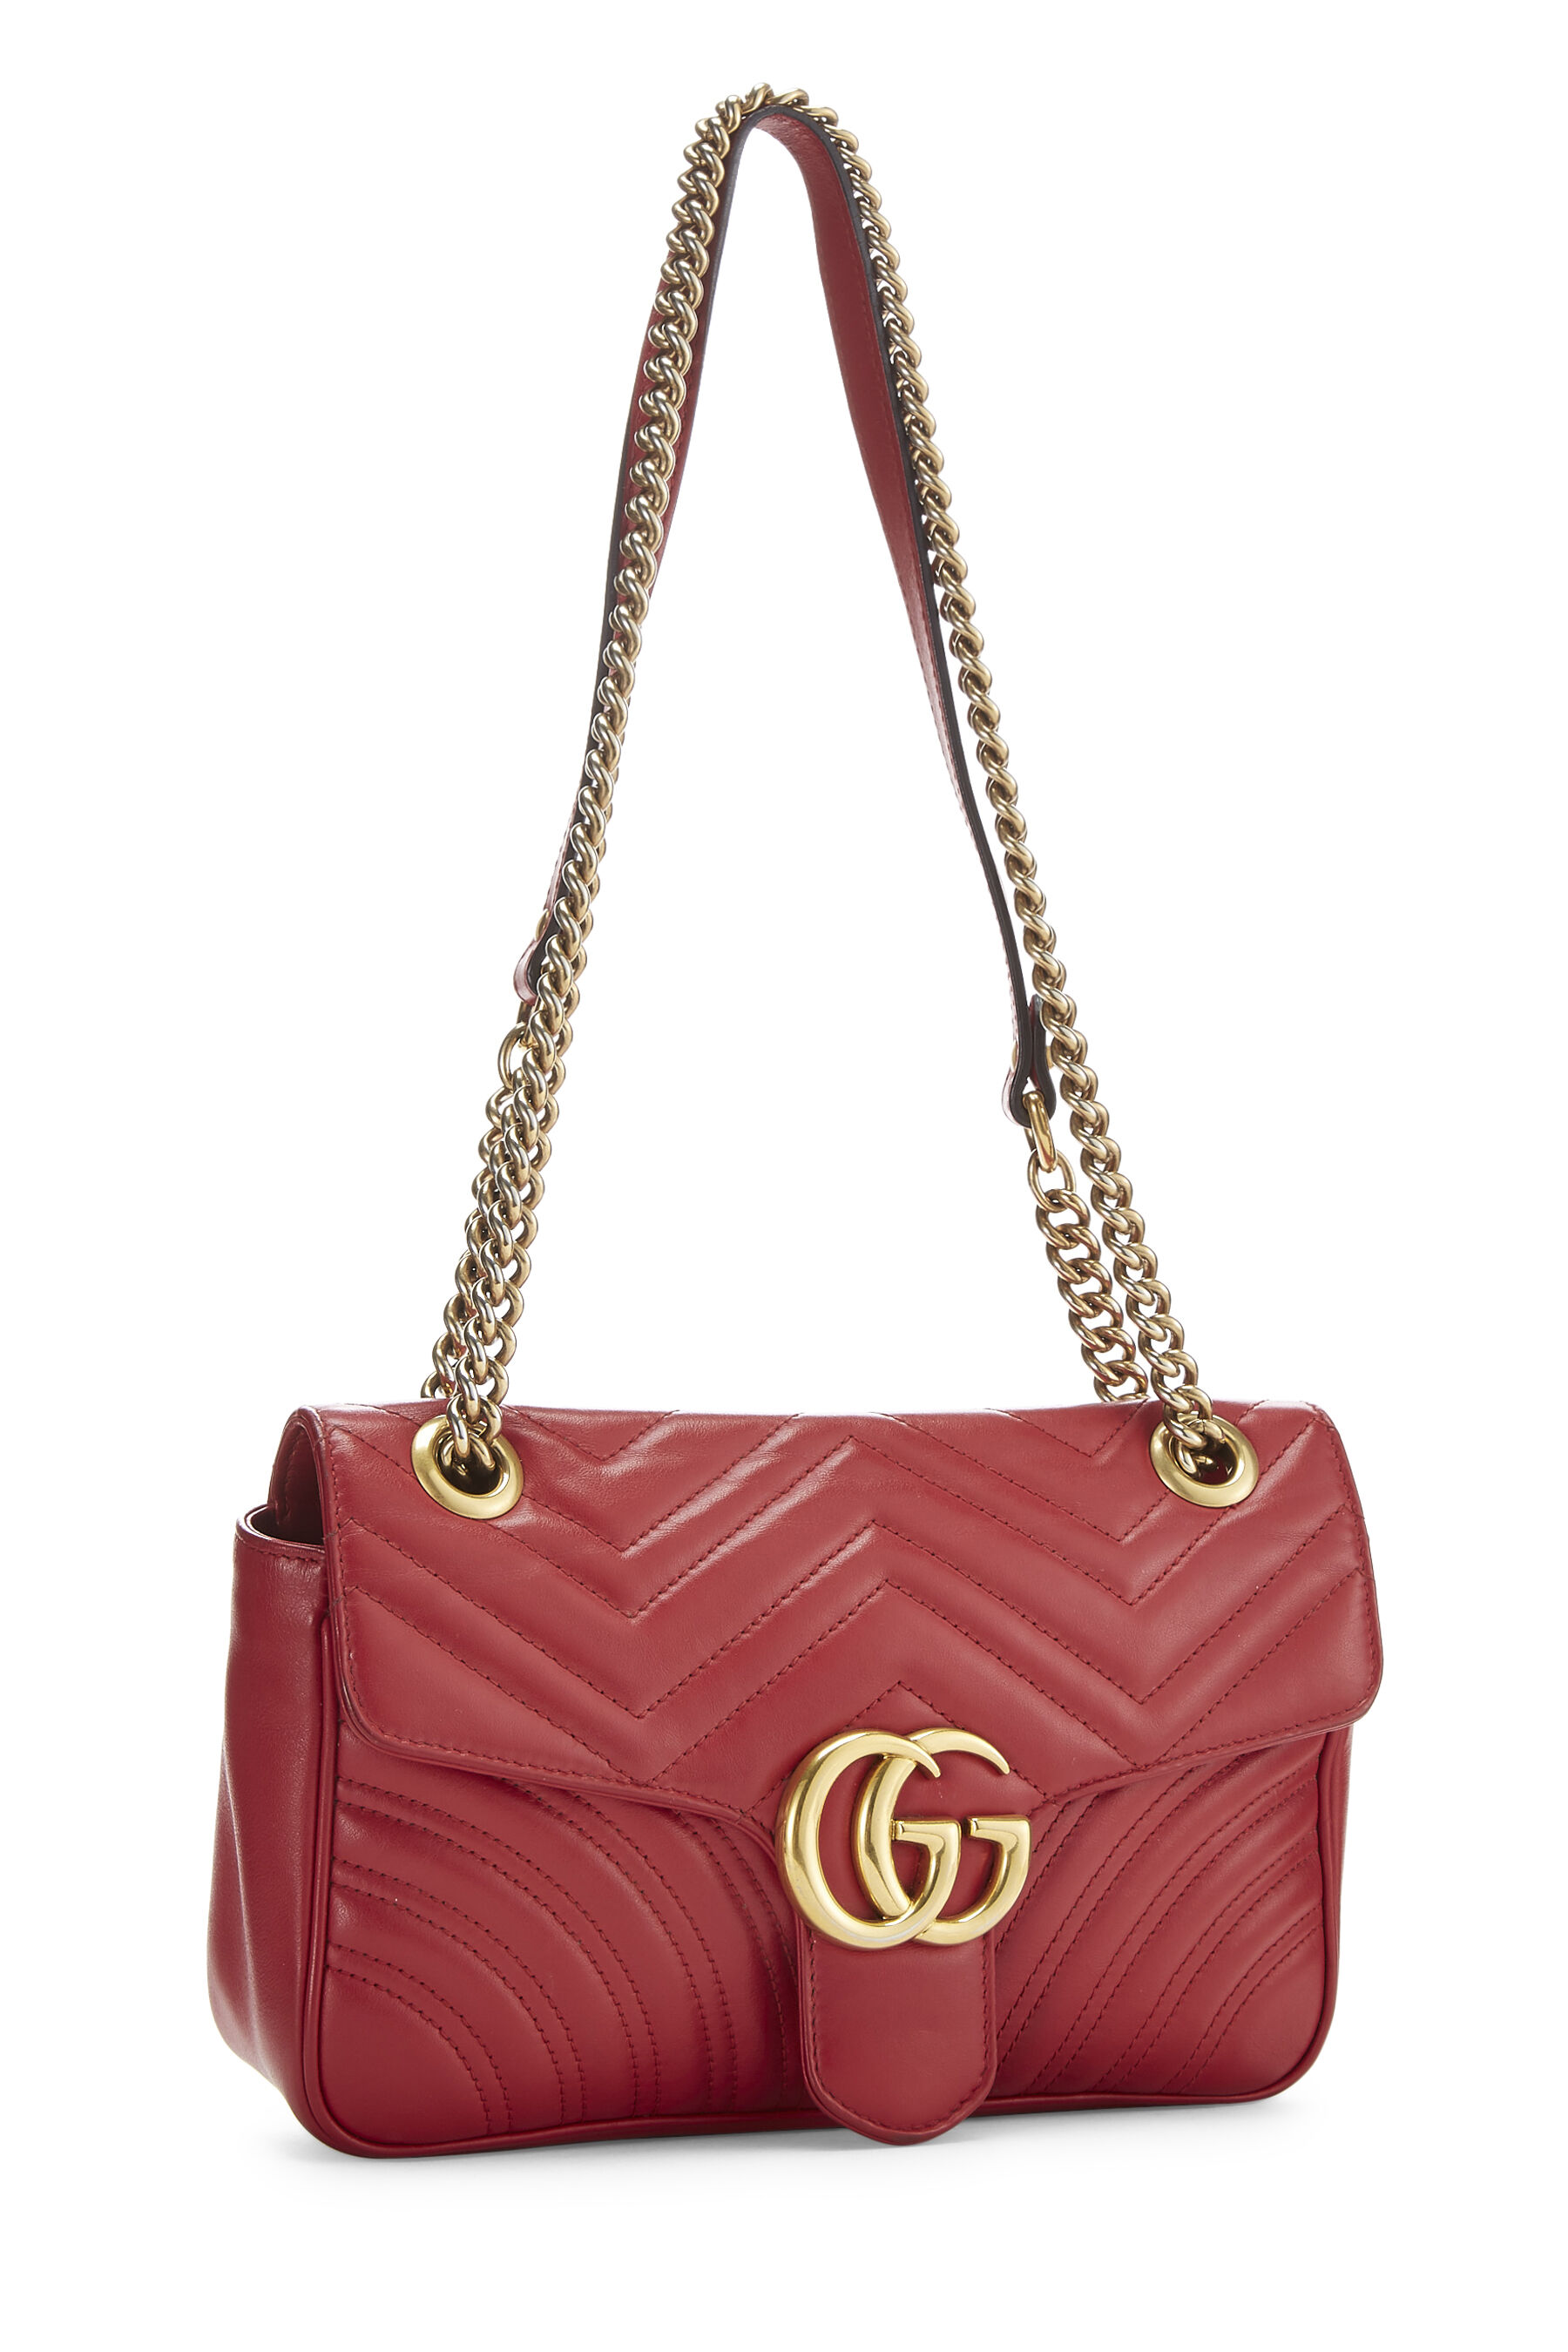 Gucci Red Leather GG Marmont Shoulder Bag Small QFB1BI06RH000 | WGACA